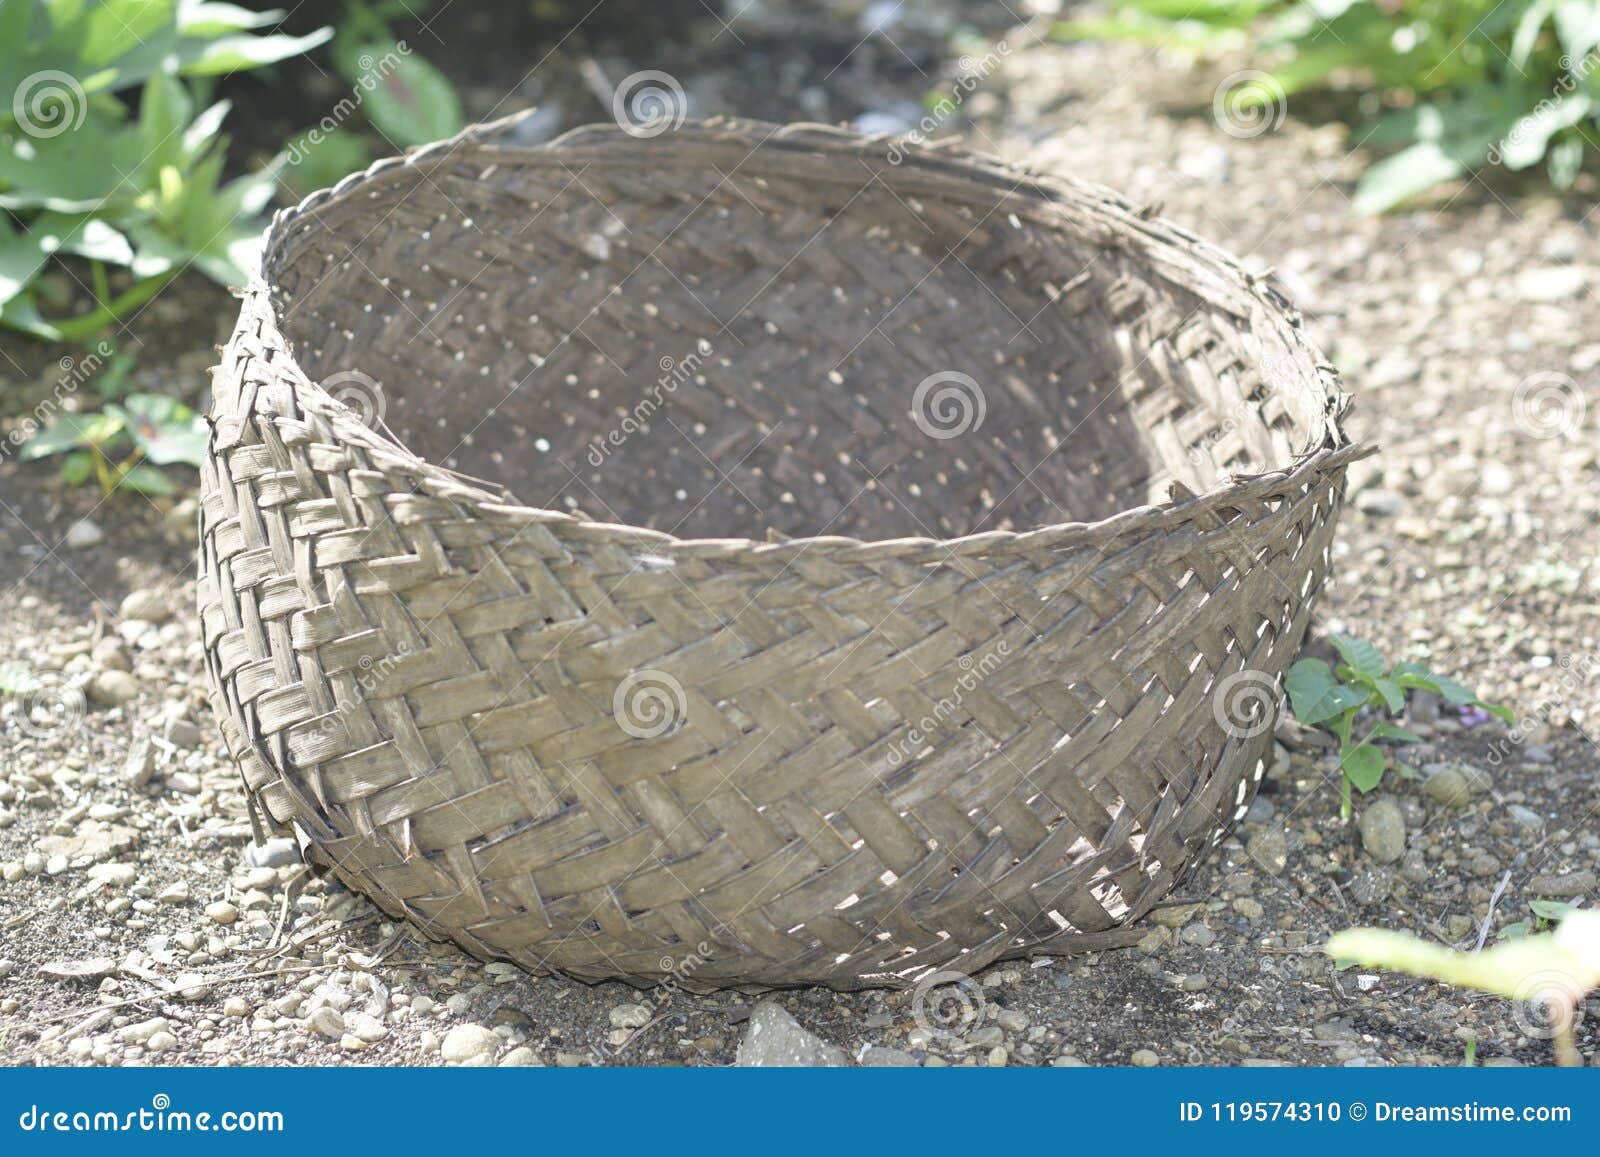 Alfombra de palma de coco natural alfombra cesta de flores cesta de pared cesta de coco palma colgante cesta estera animal animal reptil alfombra 40100 cm